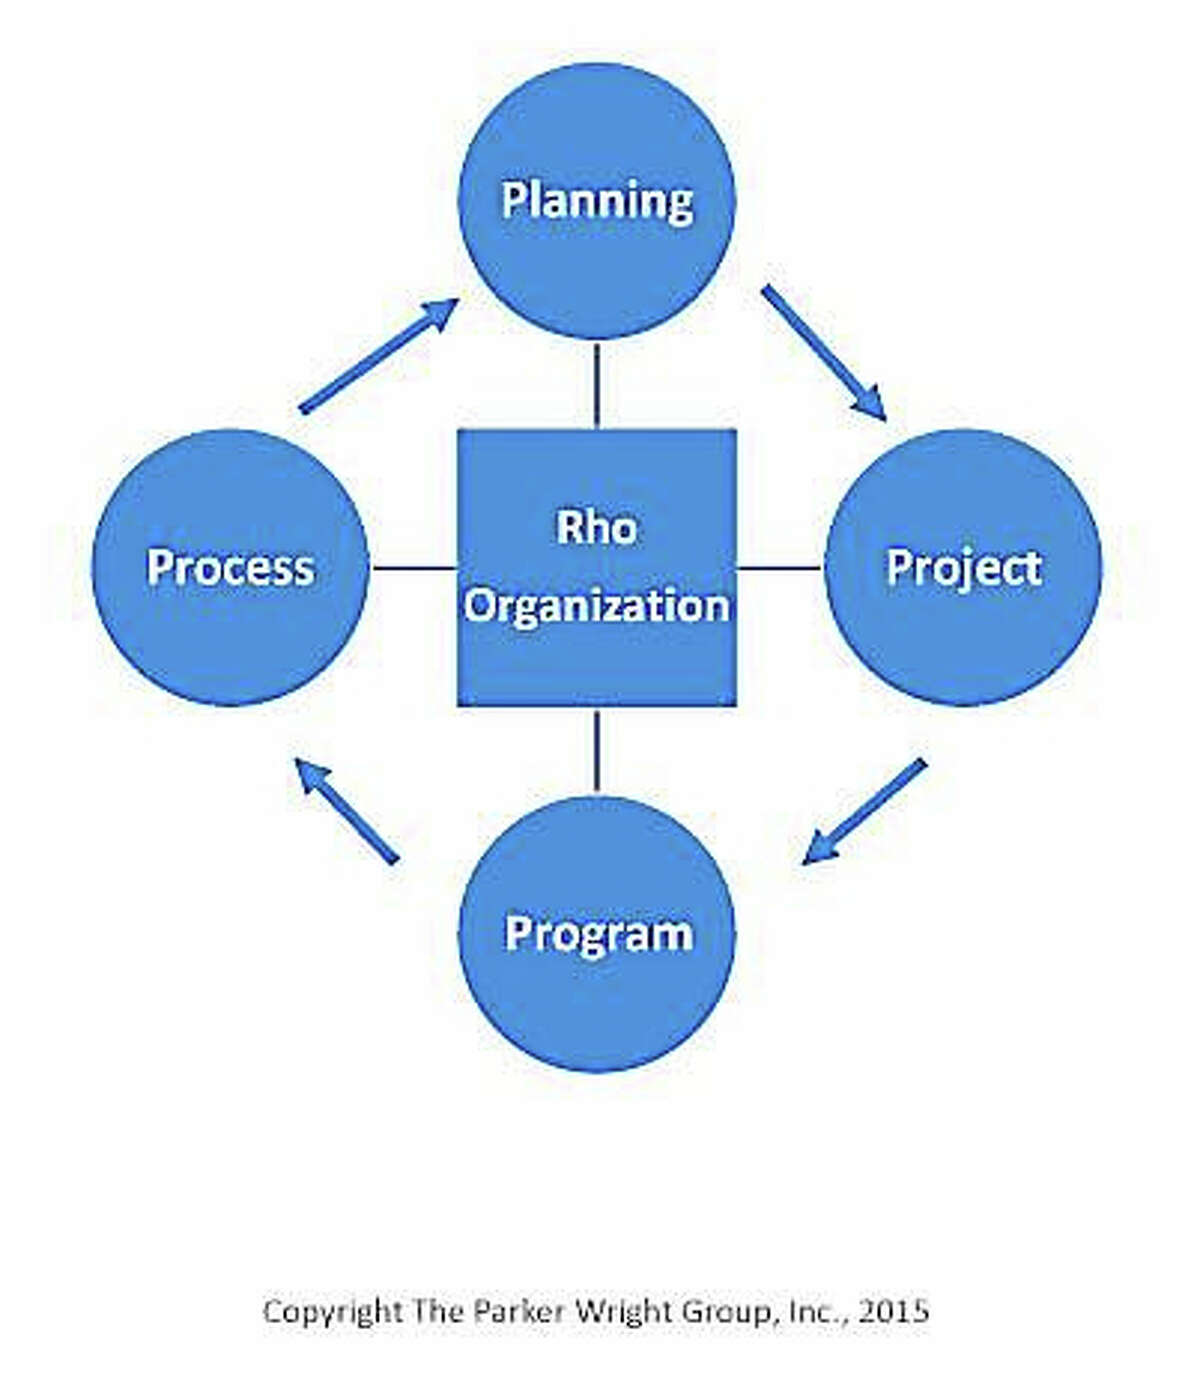 The P (Rho) Organization